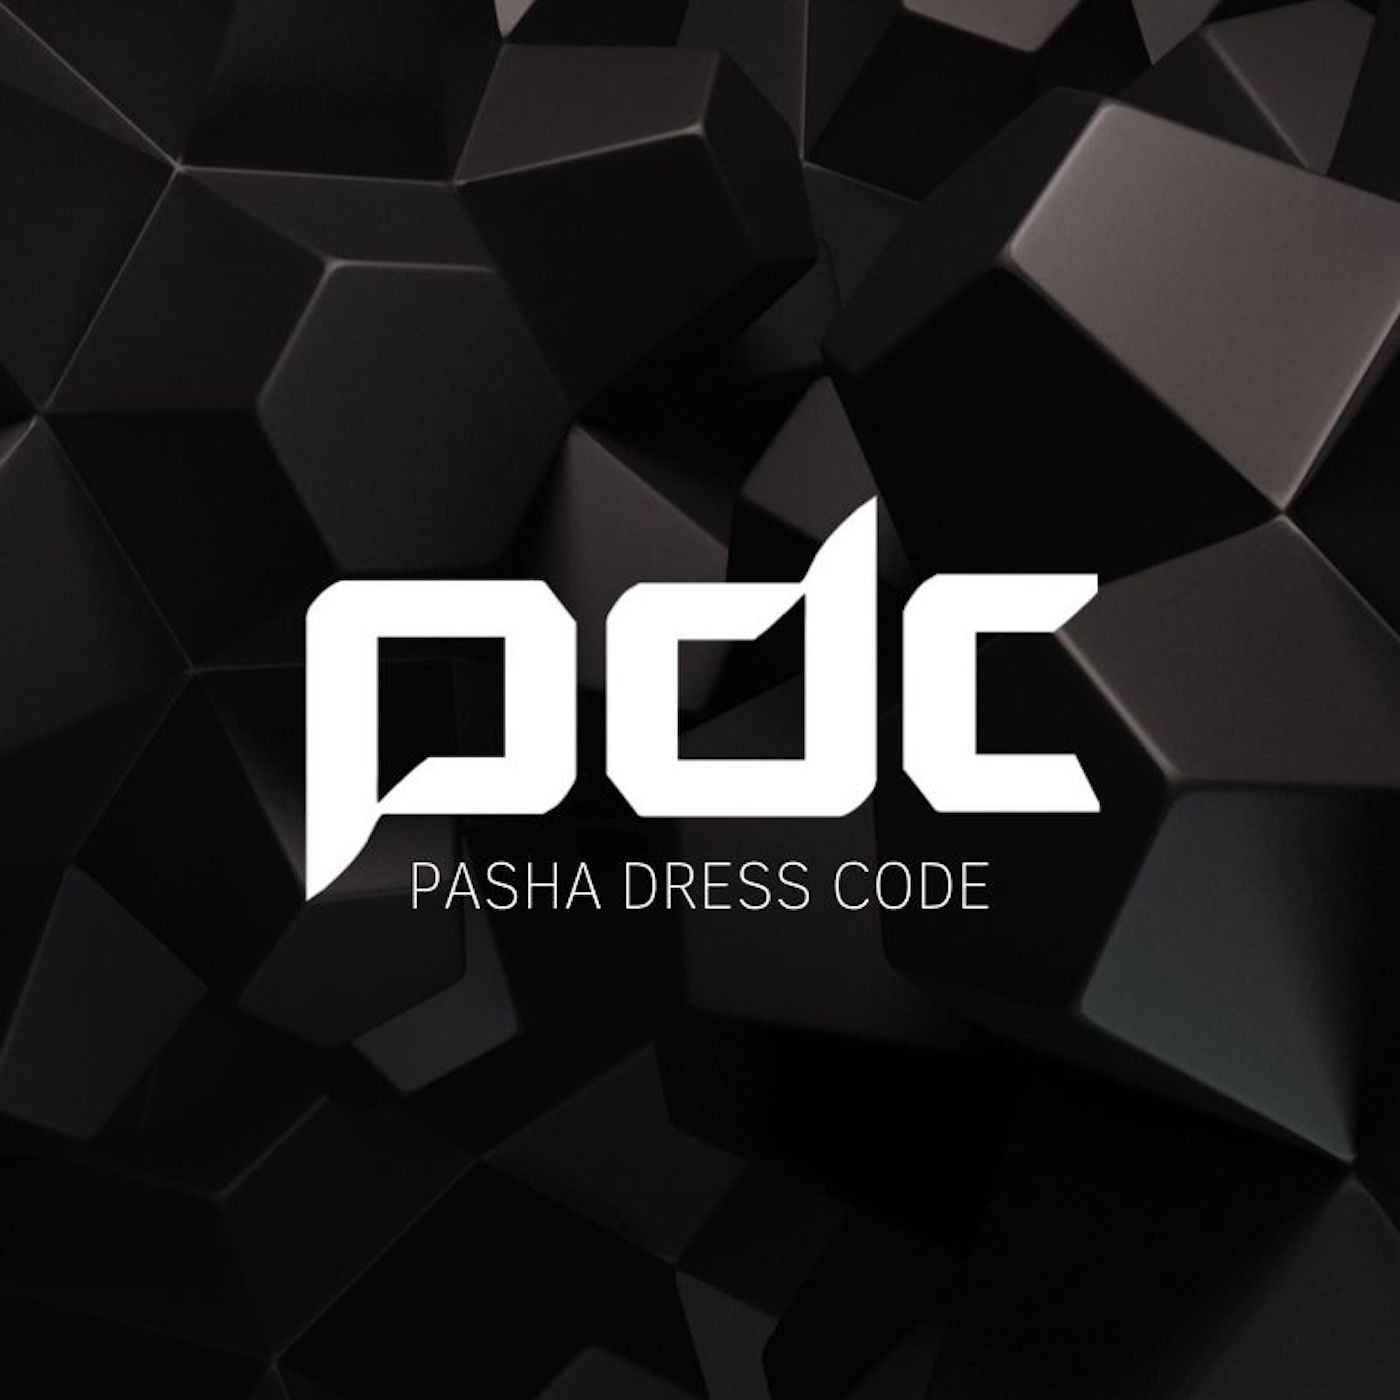 PDC | PASHA DRESS CODE